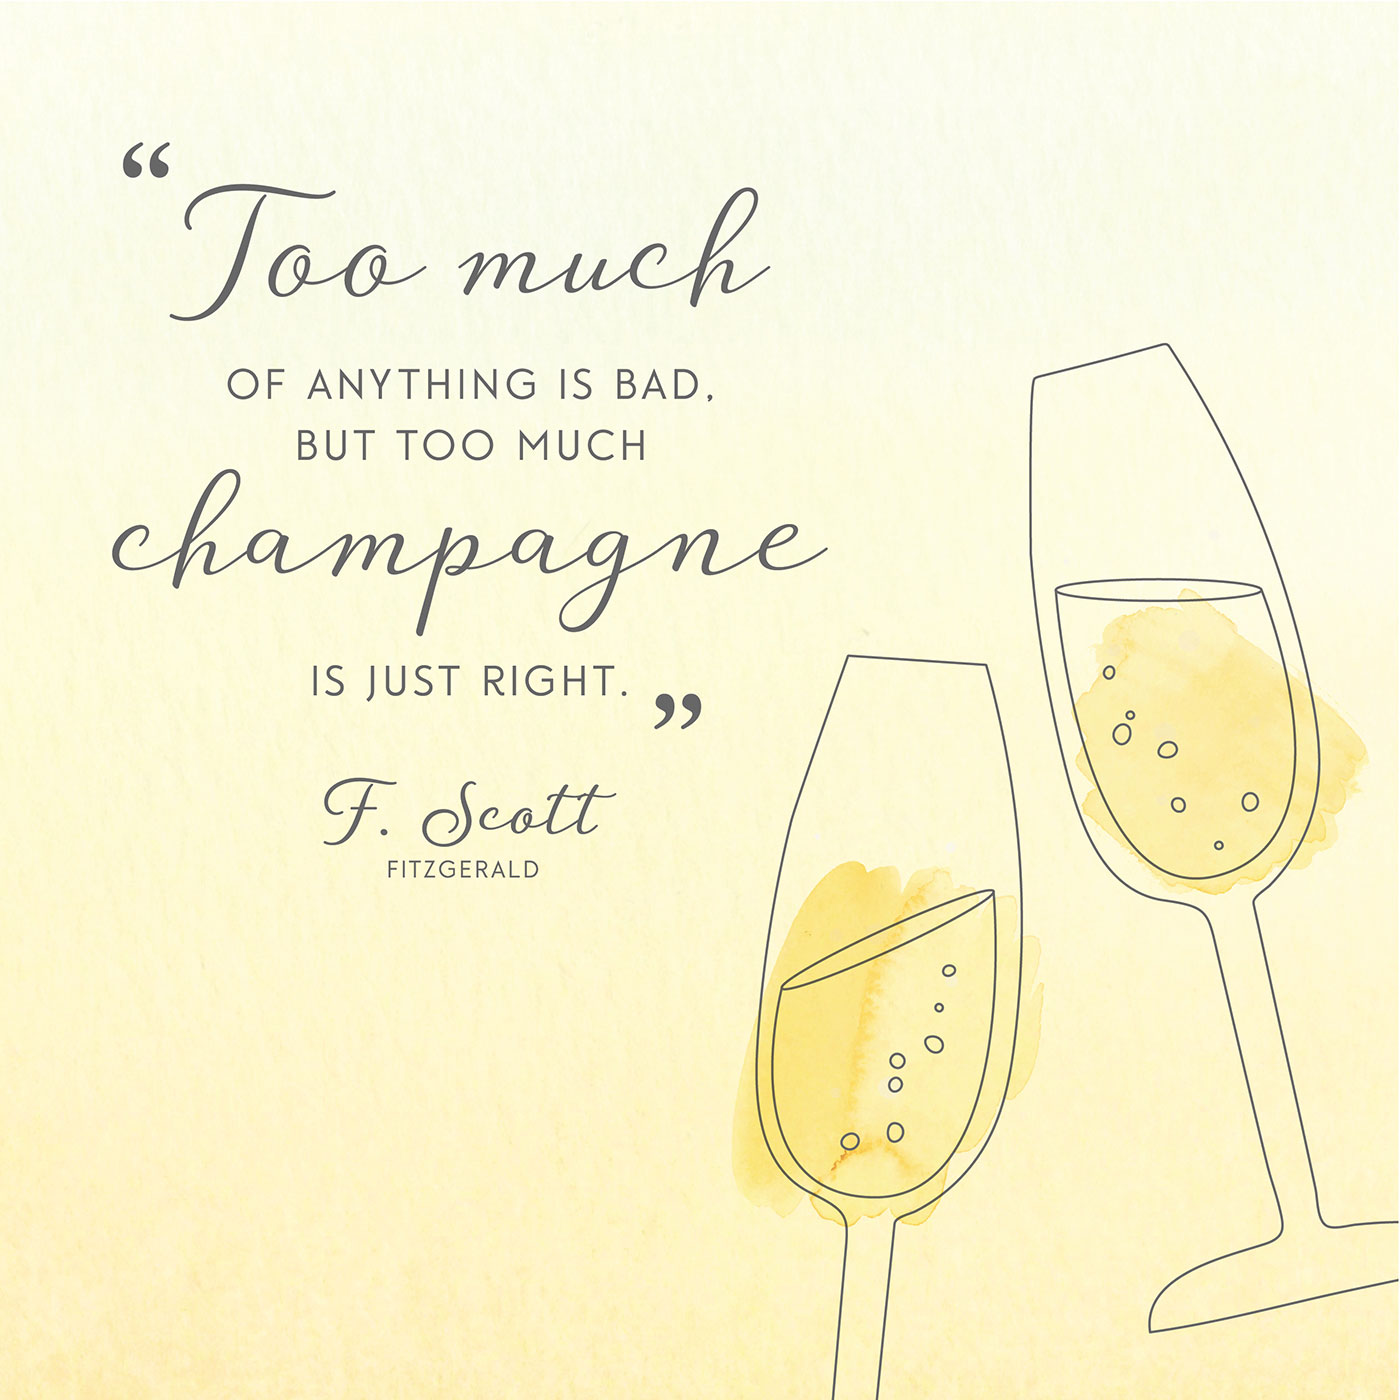 f_scott_fitzgerald_champagne_quote